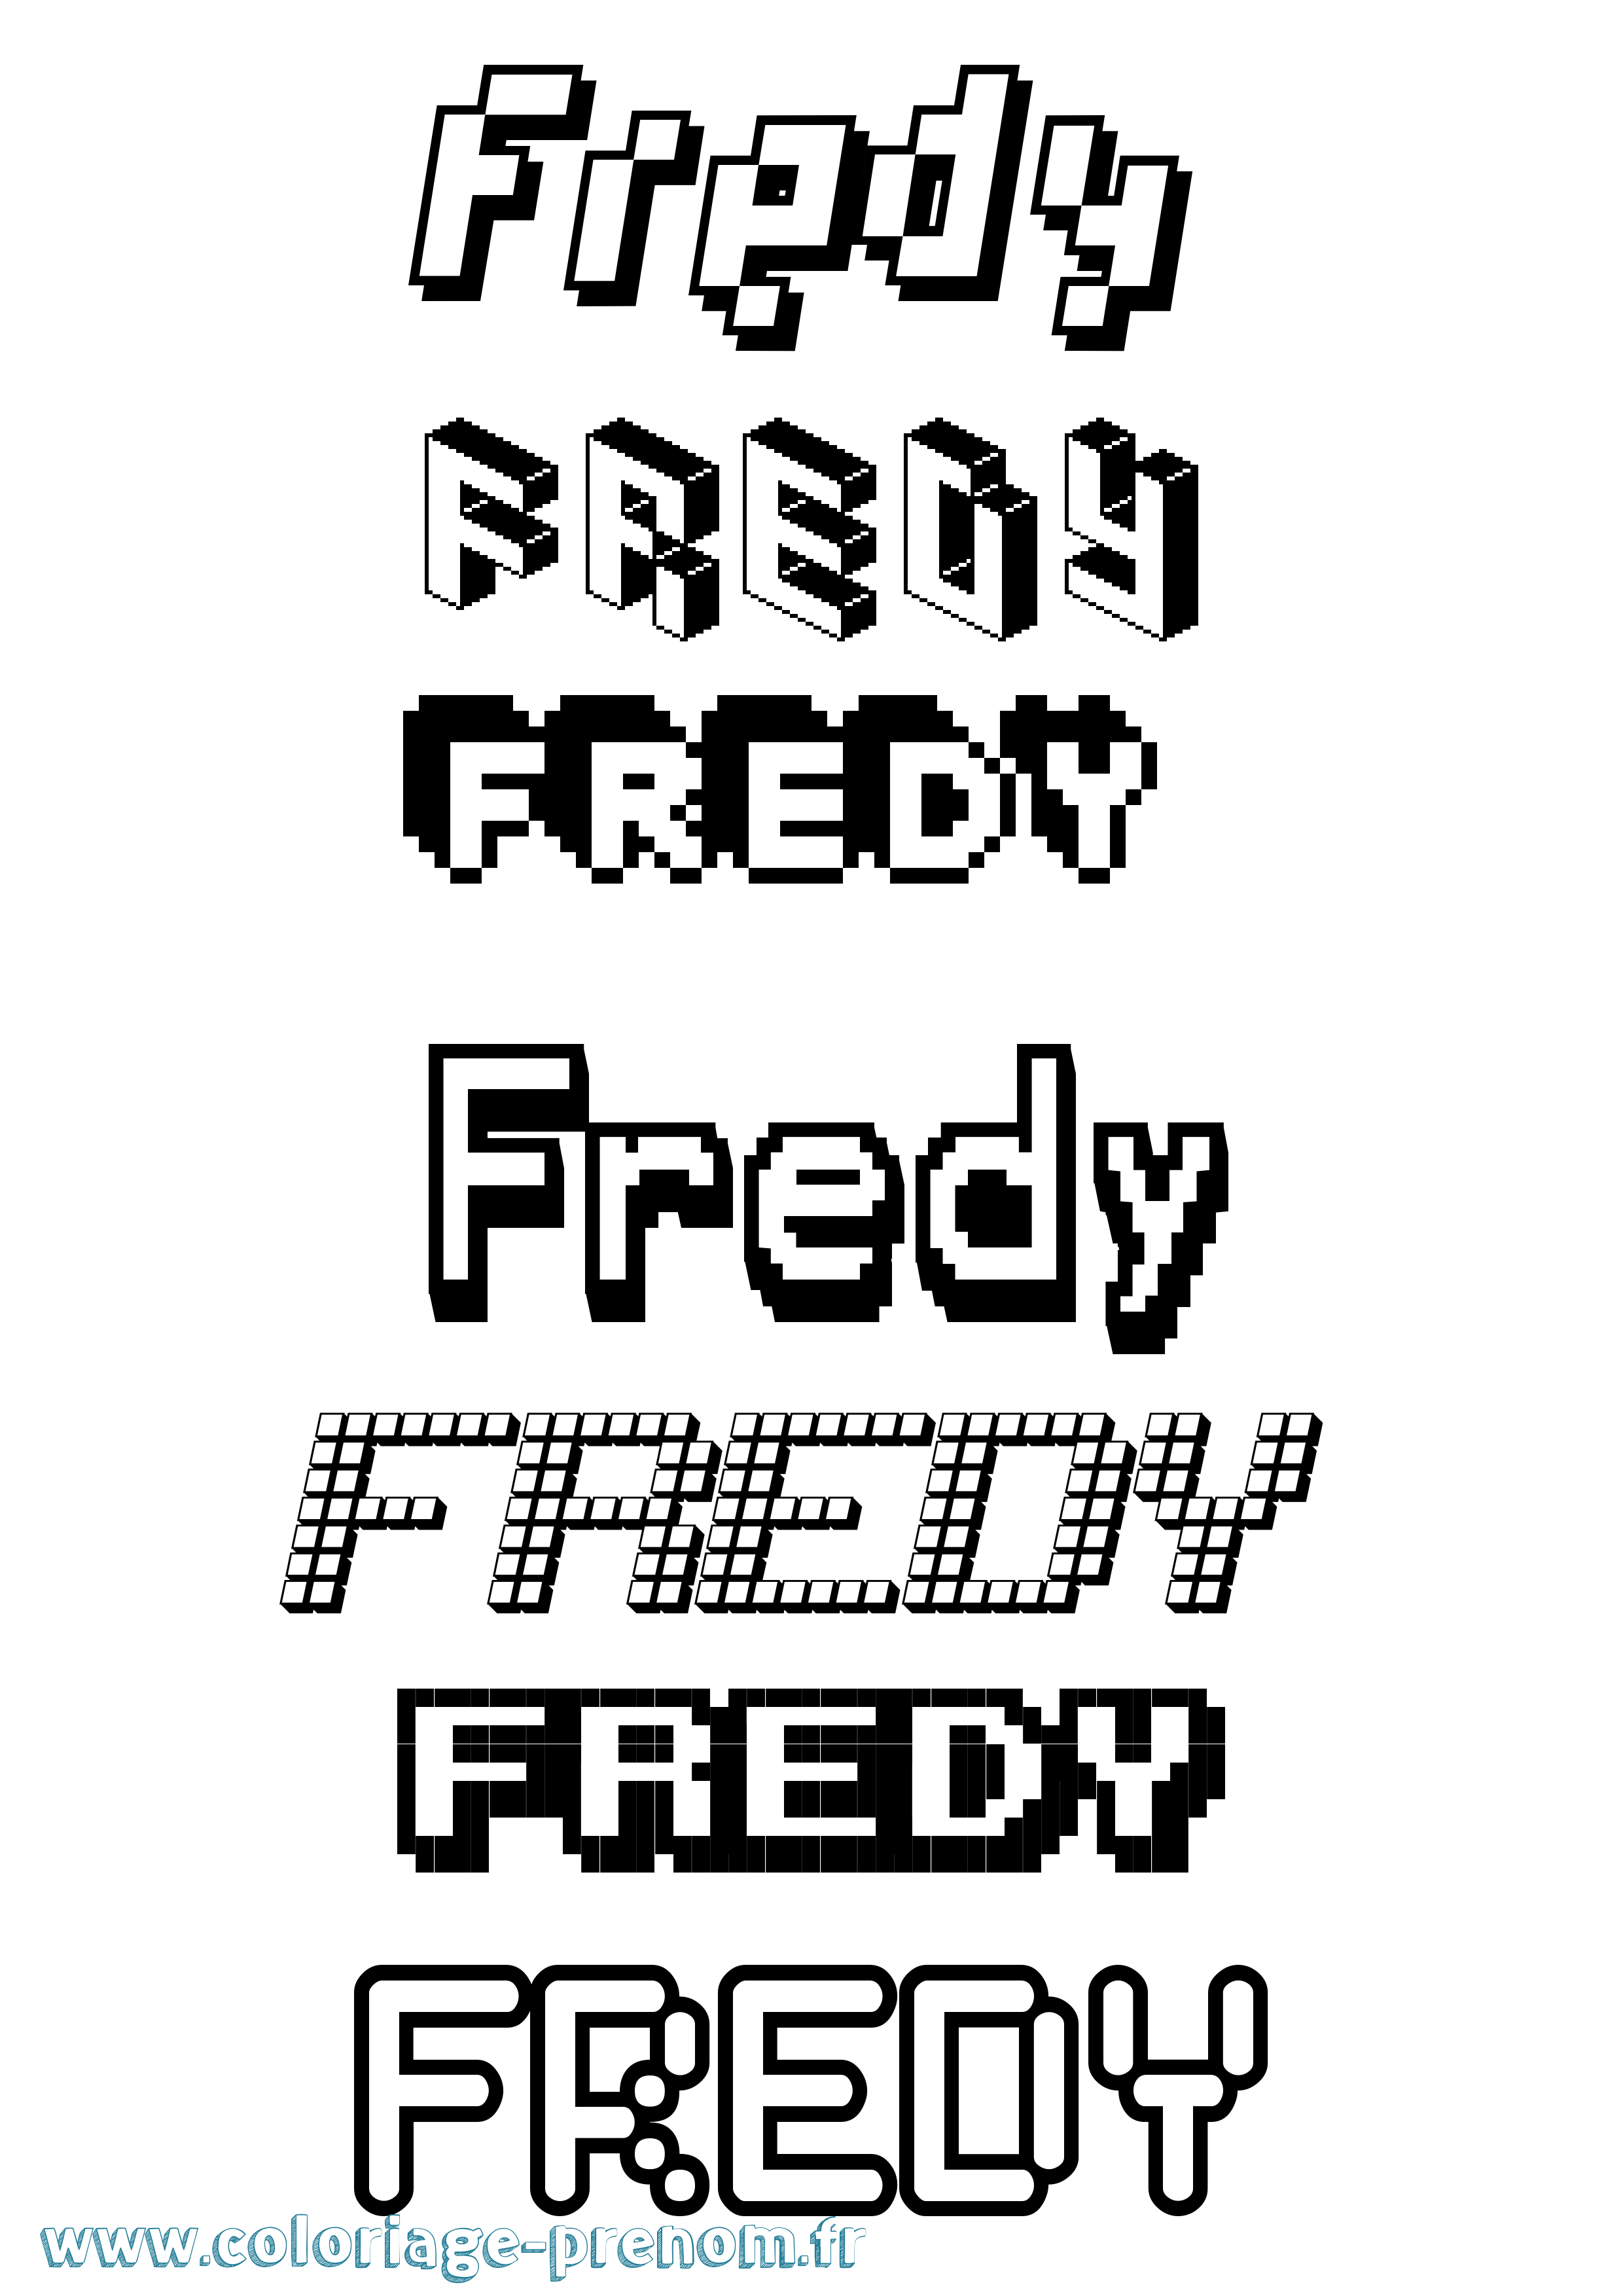 Coloriage prénom Fredy Pixel